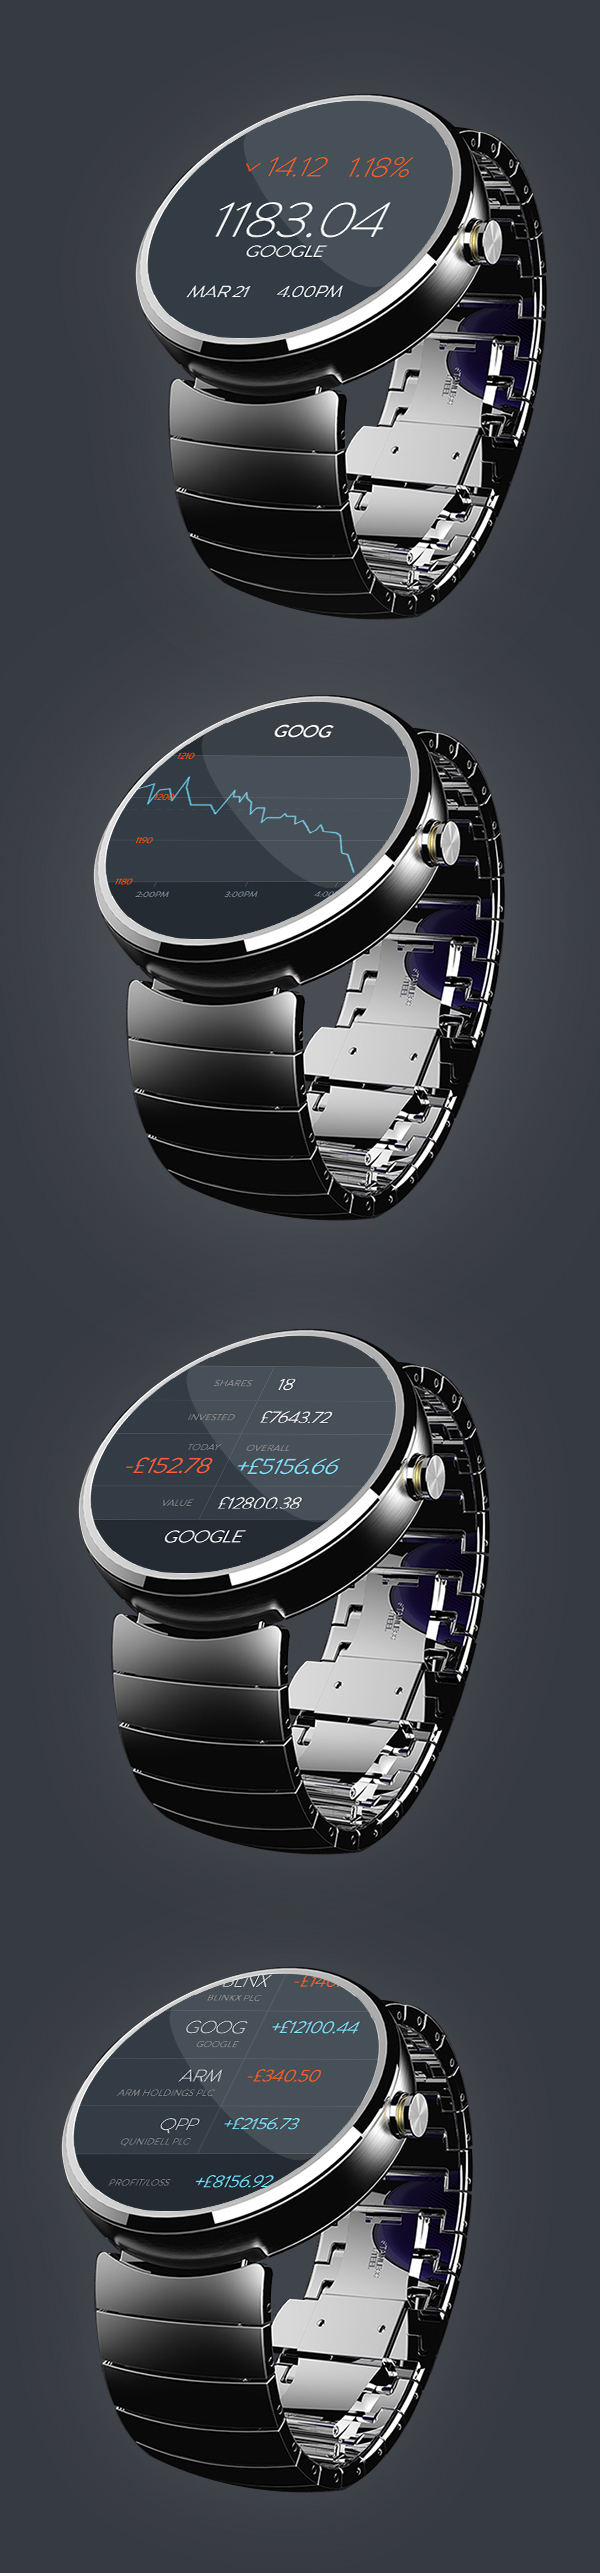 watch app design app design Moto 360 smart watch app i-watch andriod wear